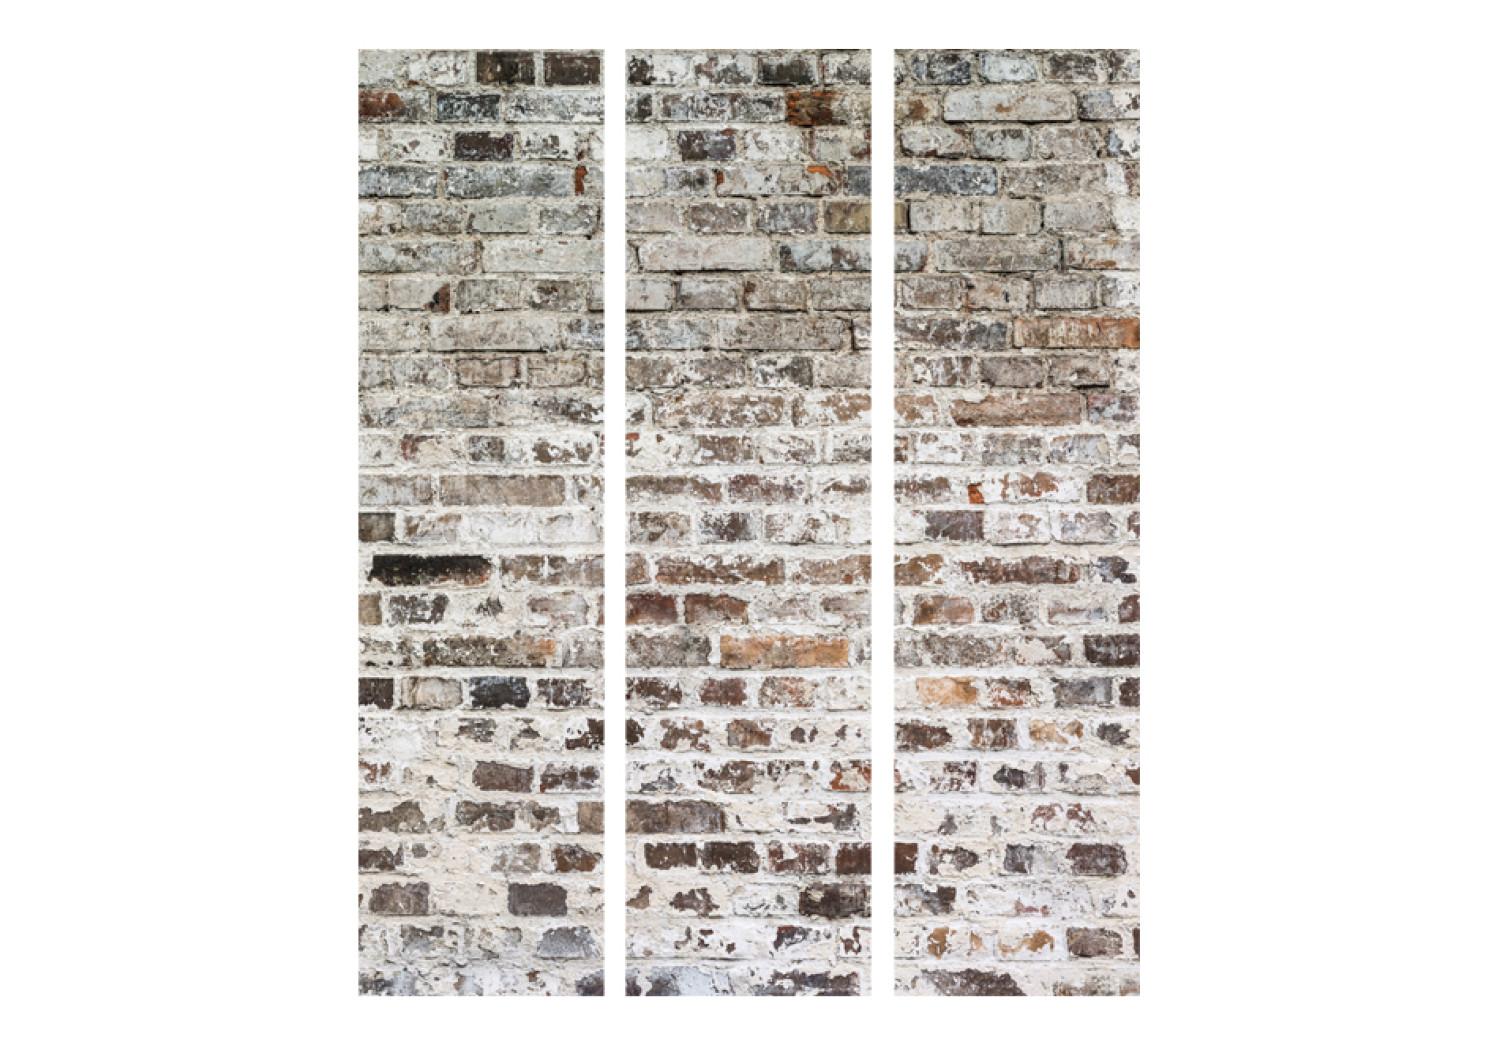 Biombo Muros antiguos - textura de ladrillos con detalles urbanos